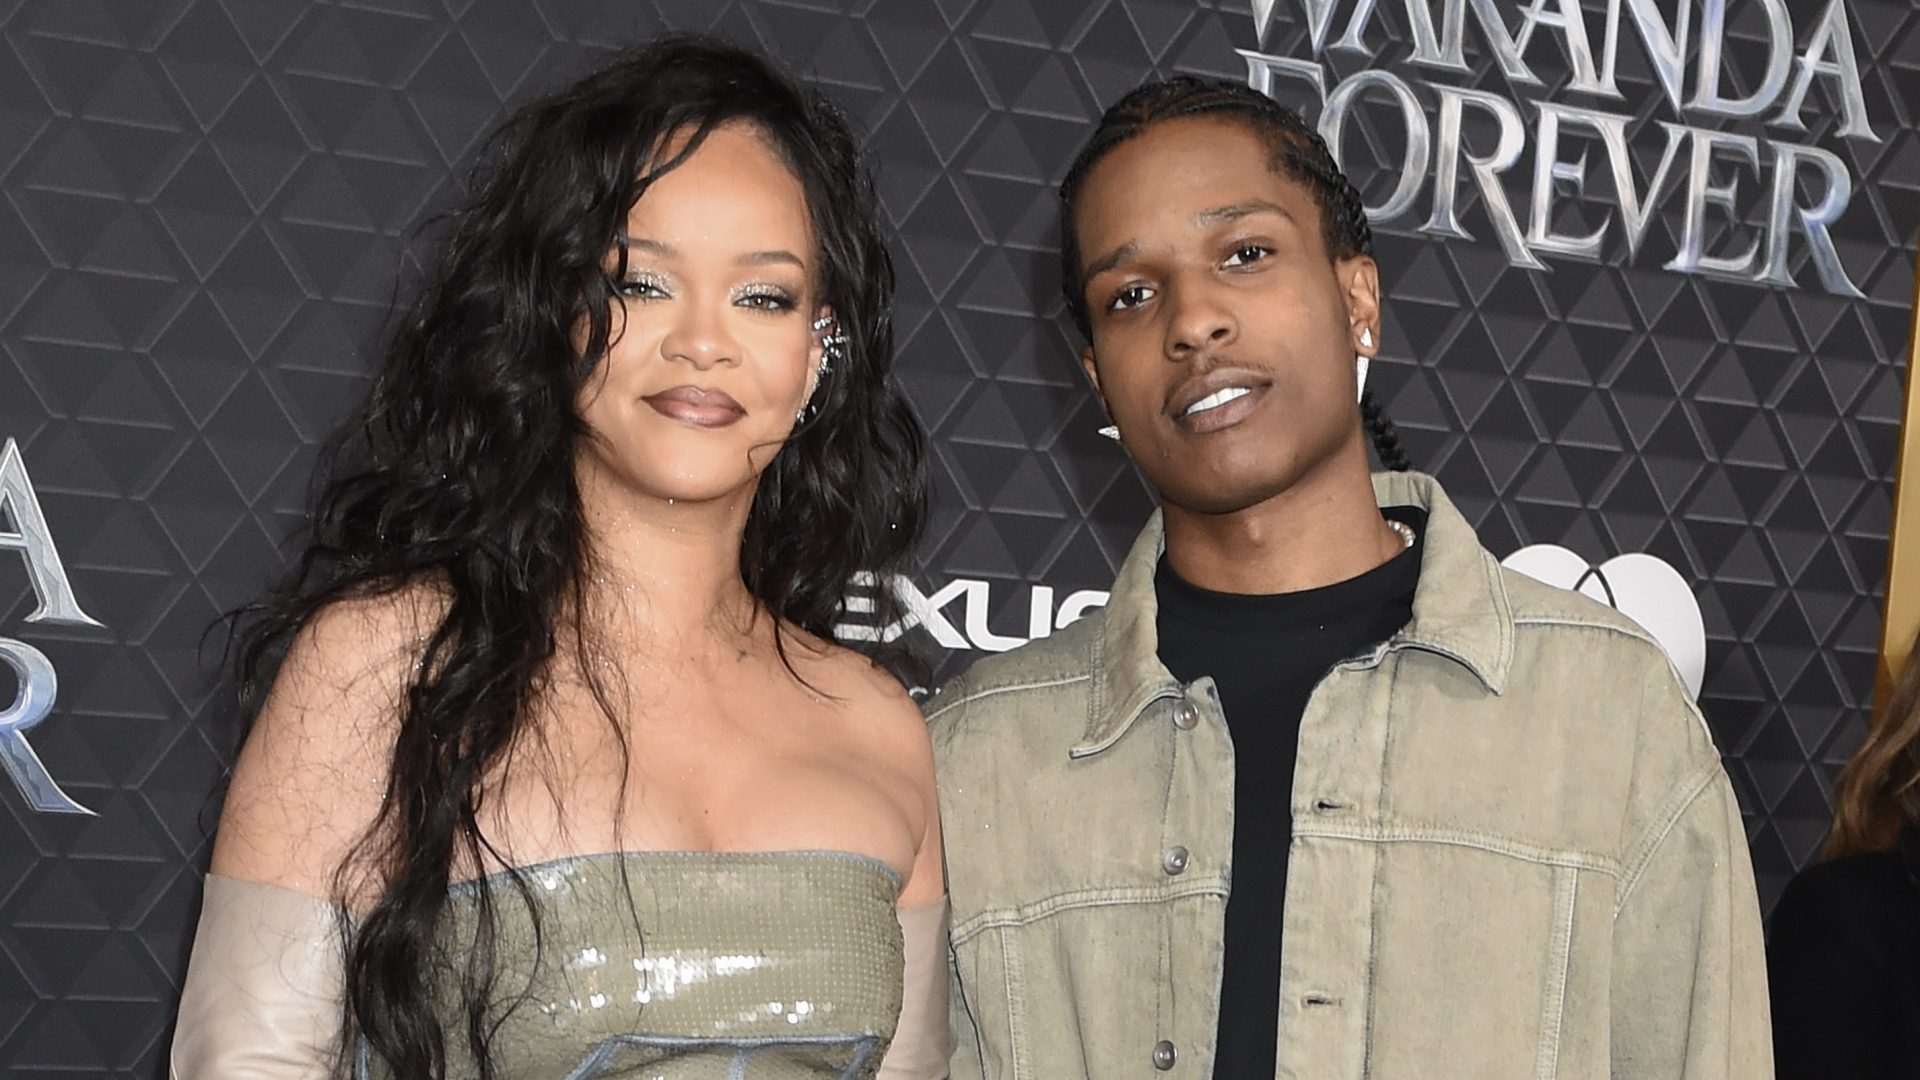 Rihanna Secretly Gives Birth to Baby Boy with A$AP Rocky